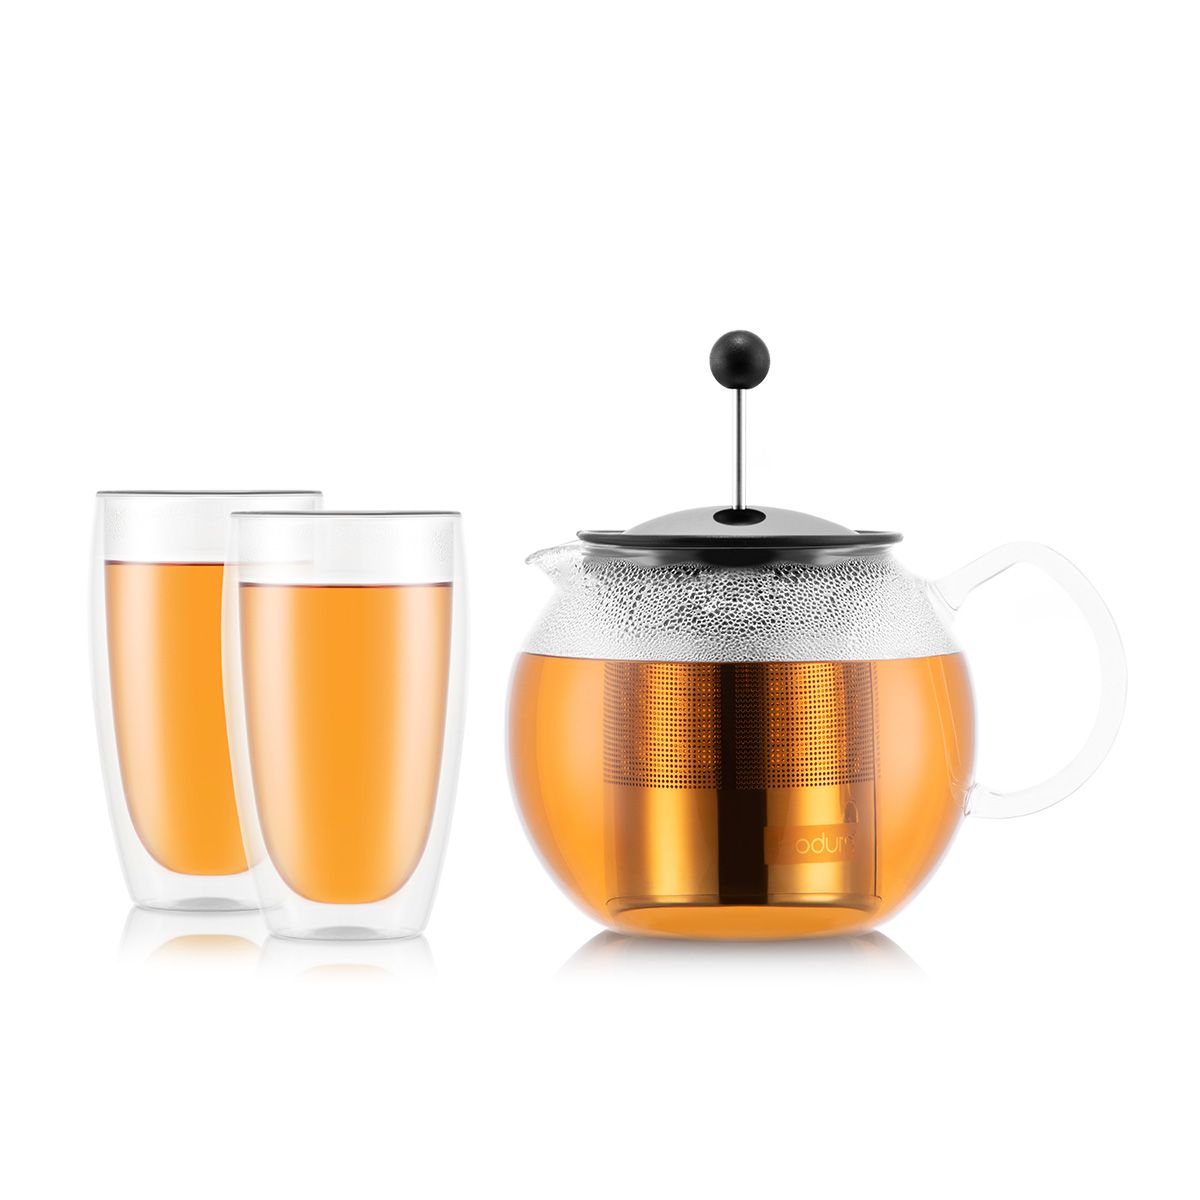 Bodum Assam Tea Maker avec filtre Chrome, 1 L